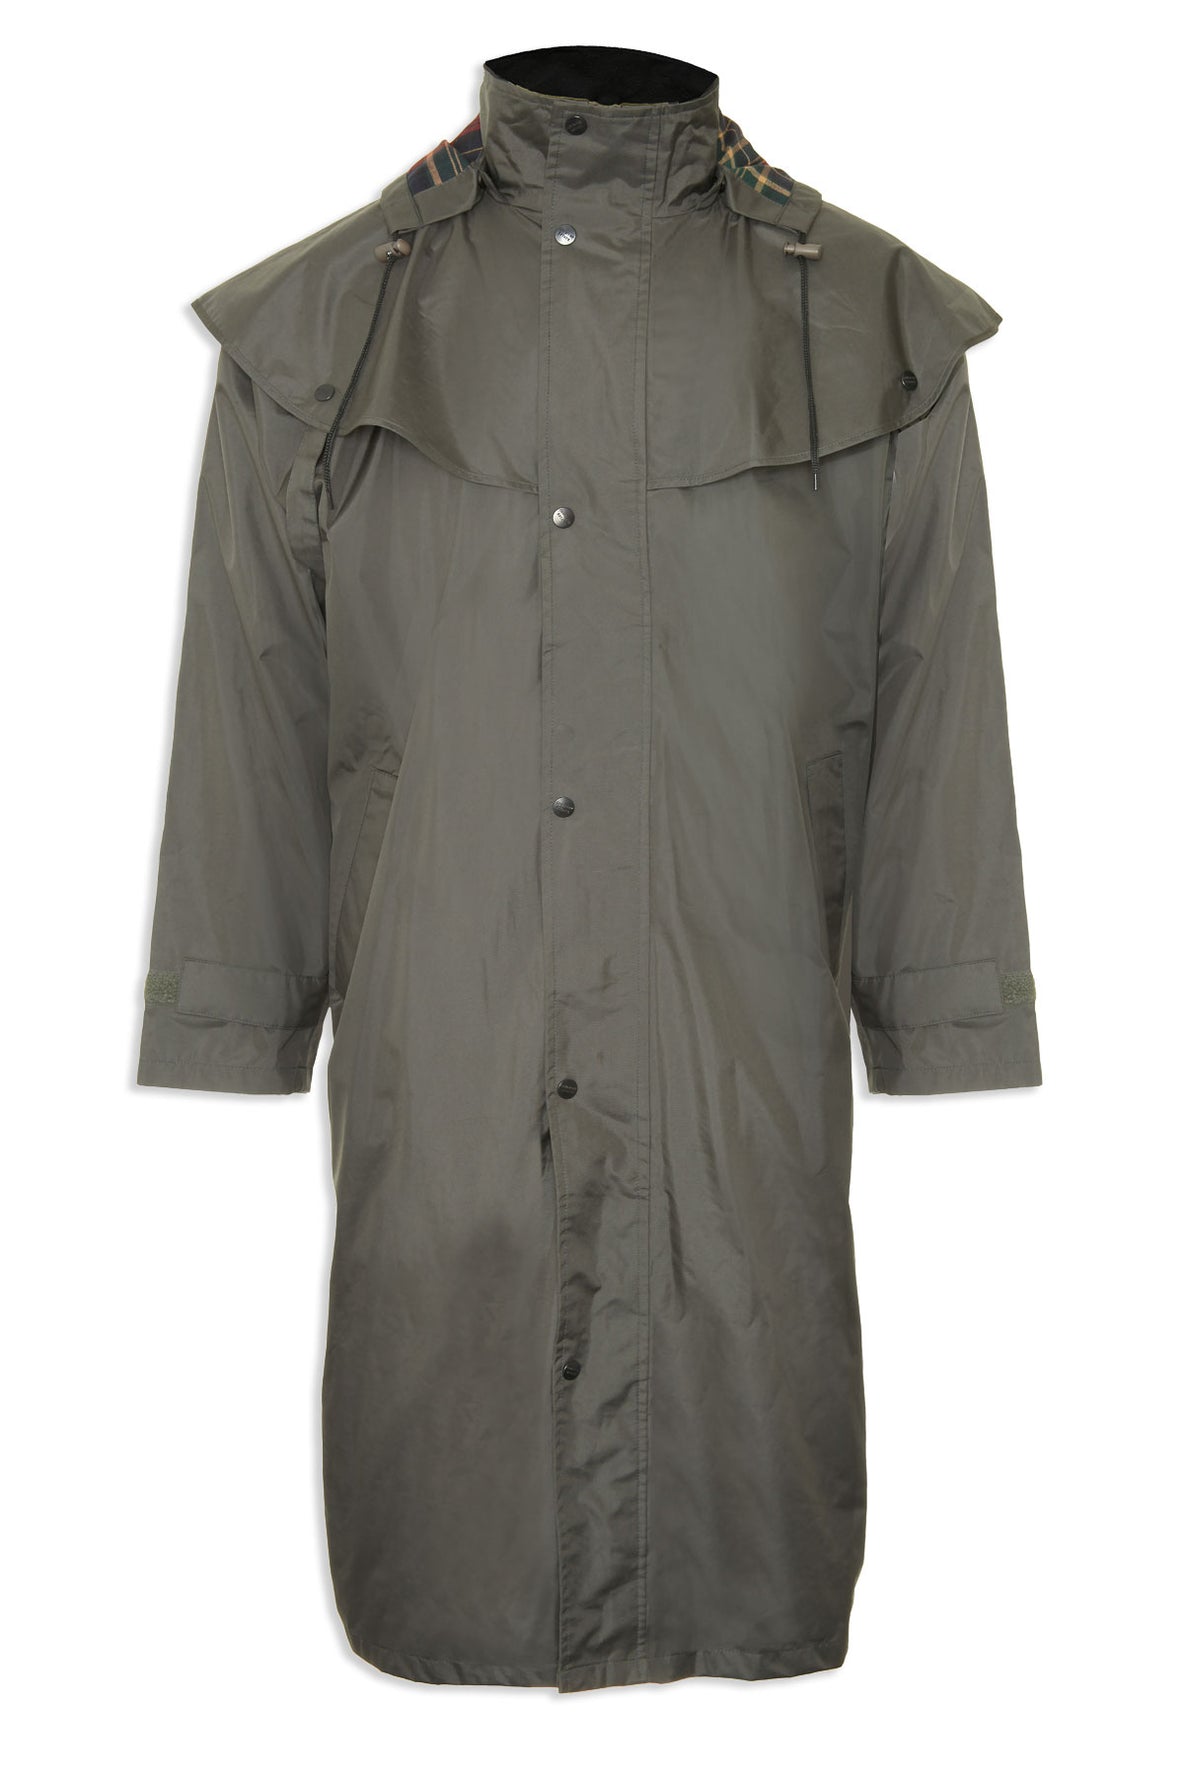 Adults Men Raincoat Waterproof Hooded Rain Jacket Long Coat